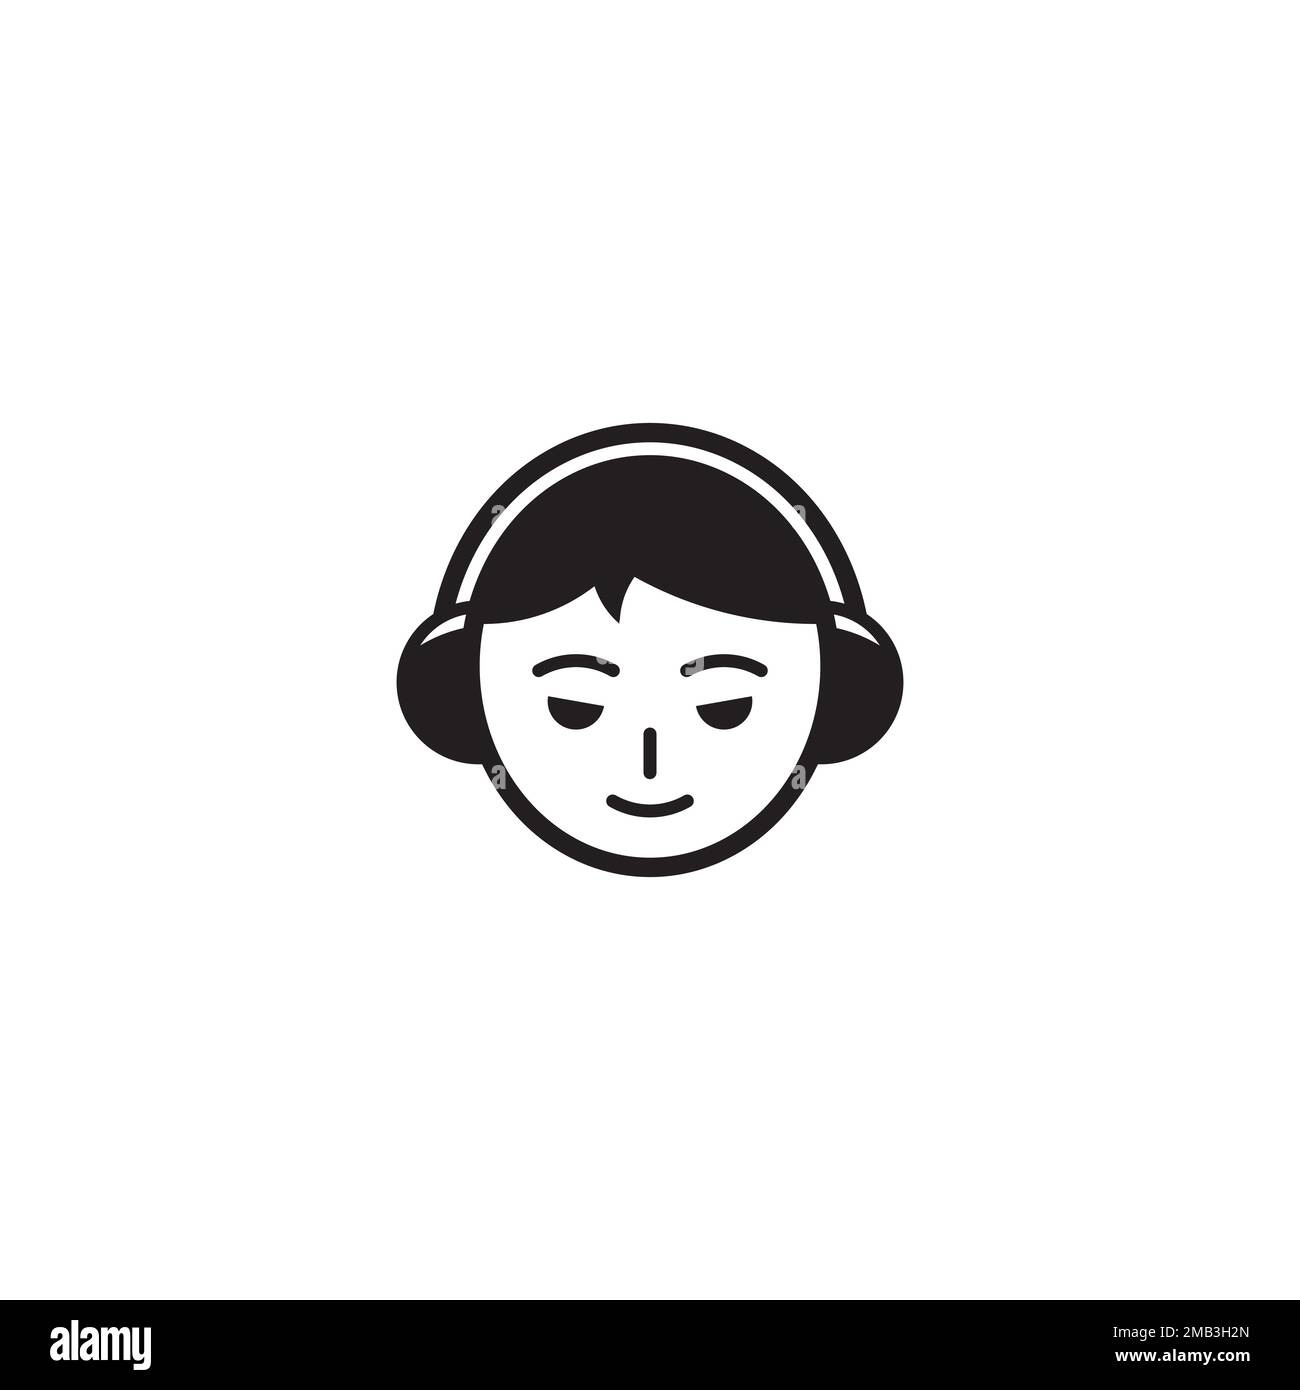 Junge mit Kopfhörer oder Kurzhaar-Girl-Logo oder Icon-Design Stock Vektor